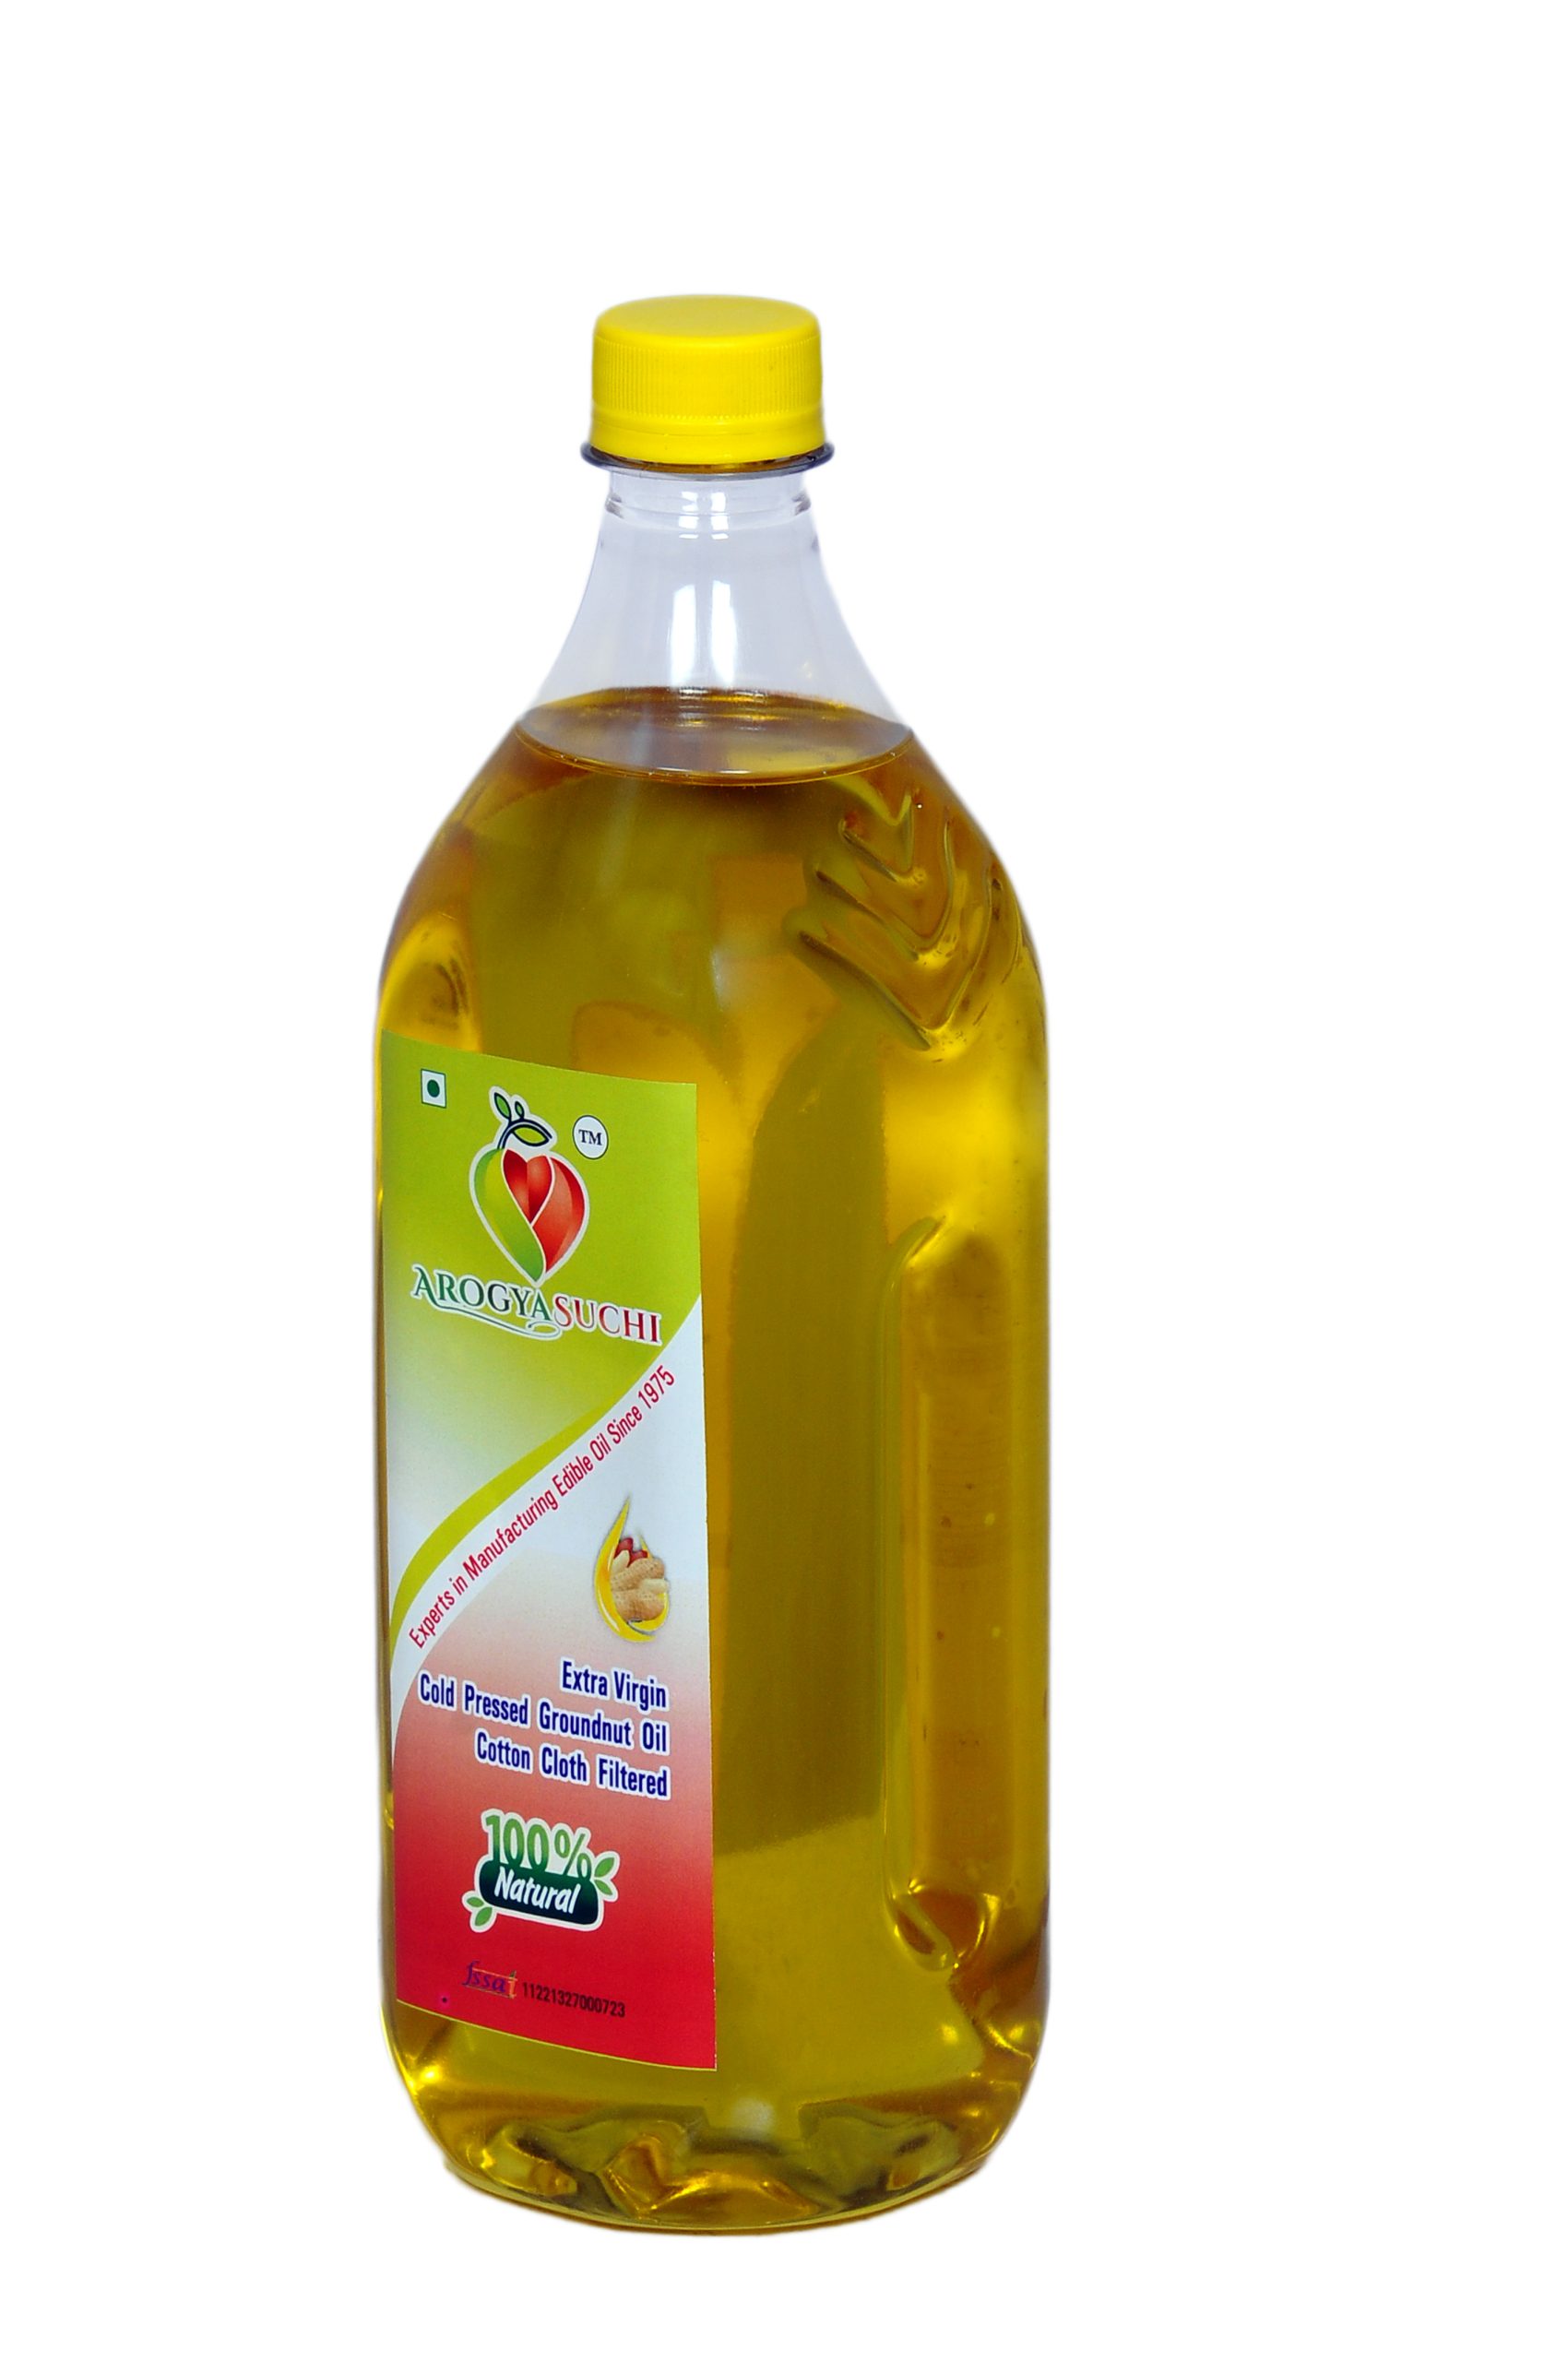 Product: Arogyasuchi Extra Virgin Cold Pressed Groundnut Oil